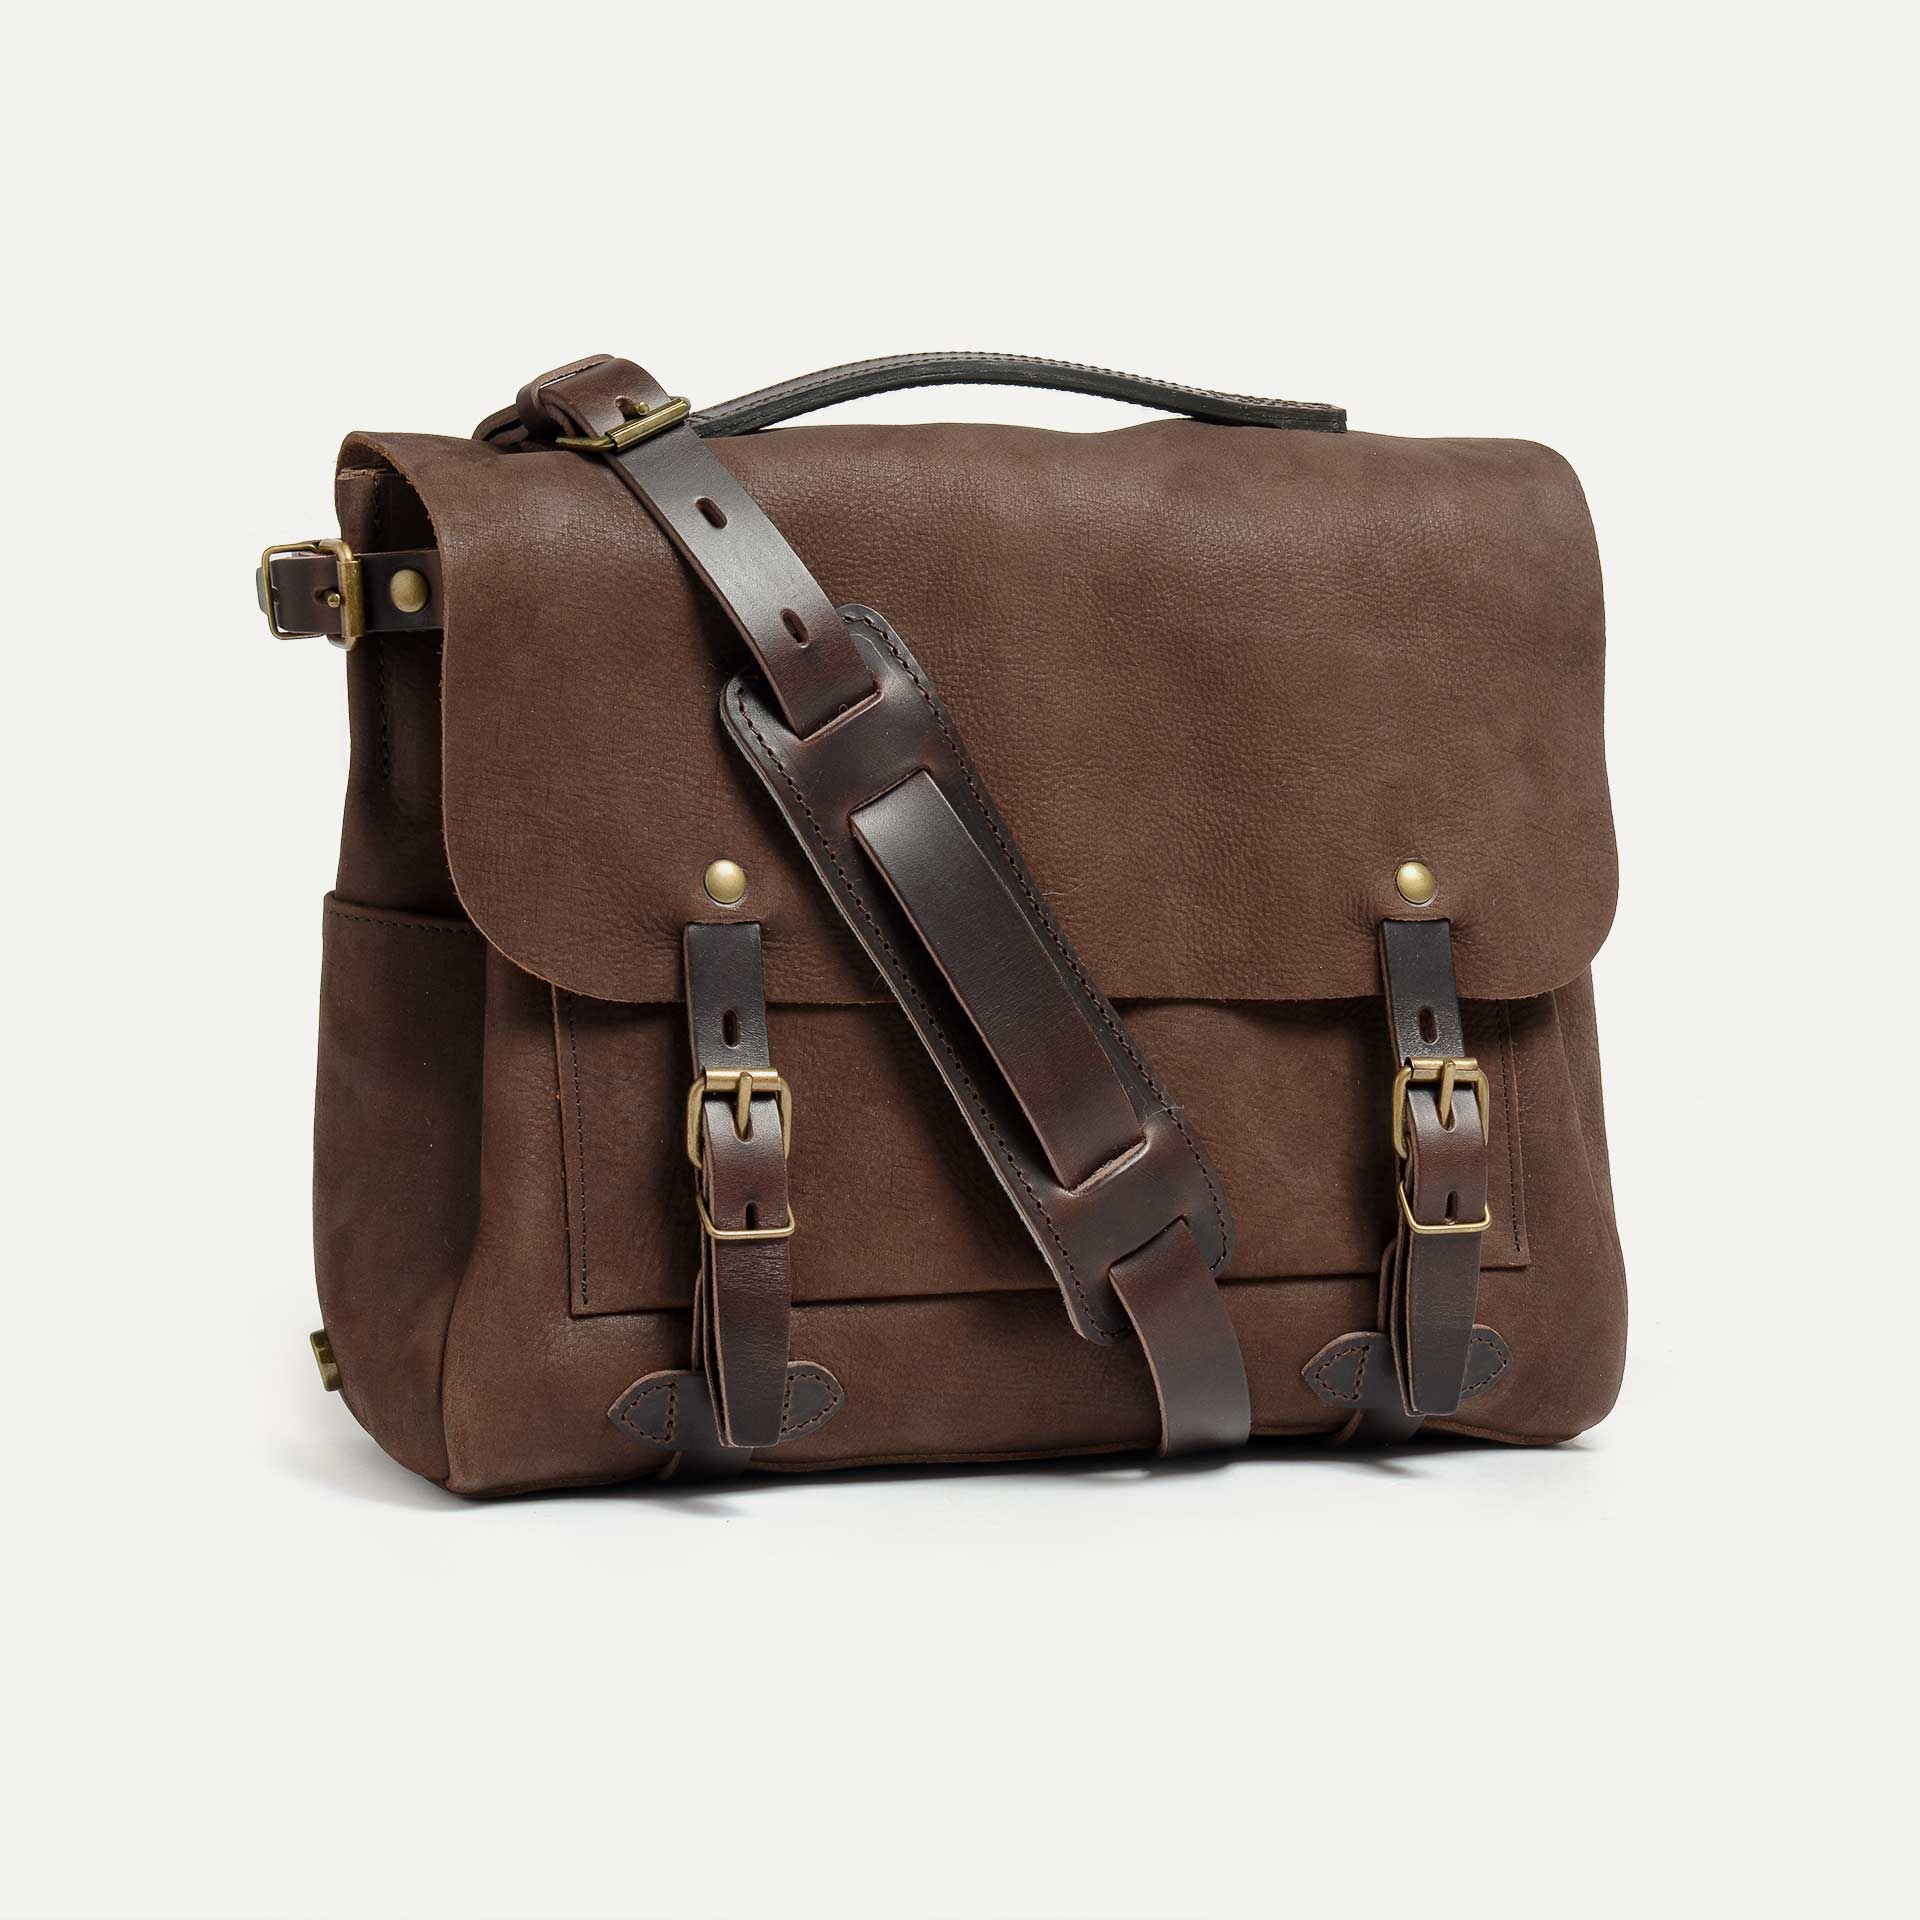 Postman bag Eclair M - Coffee / Waxed Leather (image n°2)